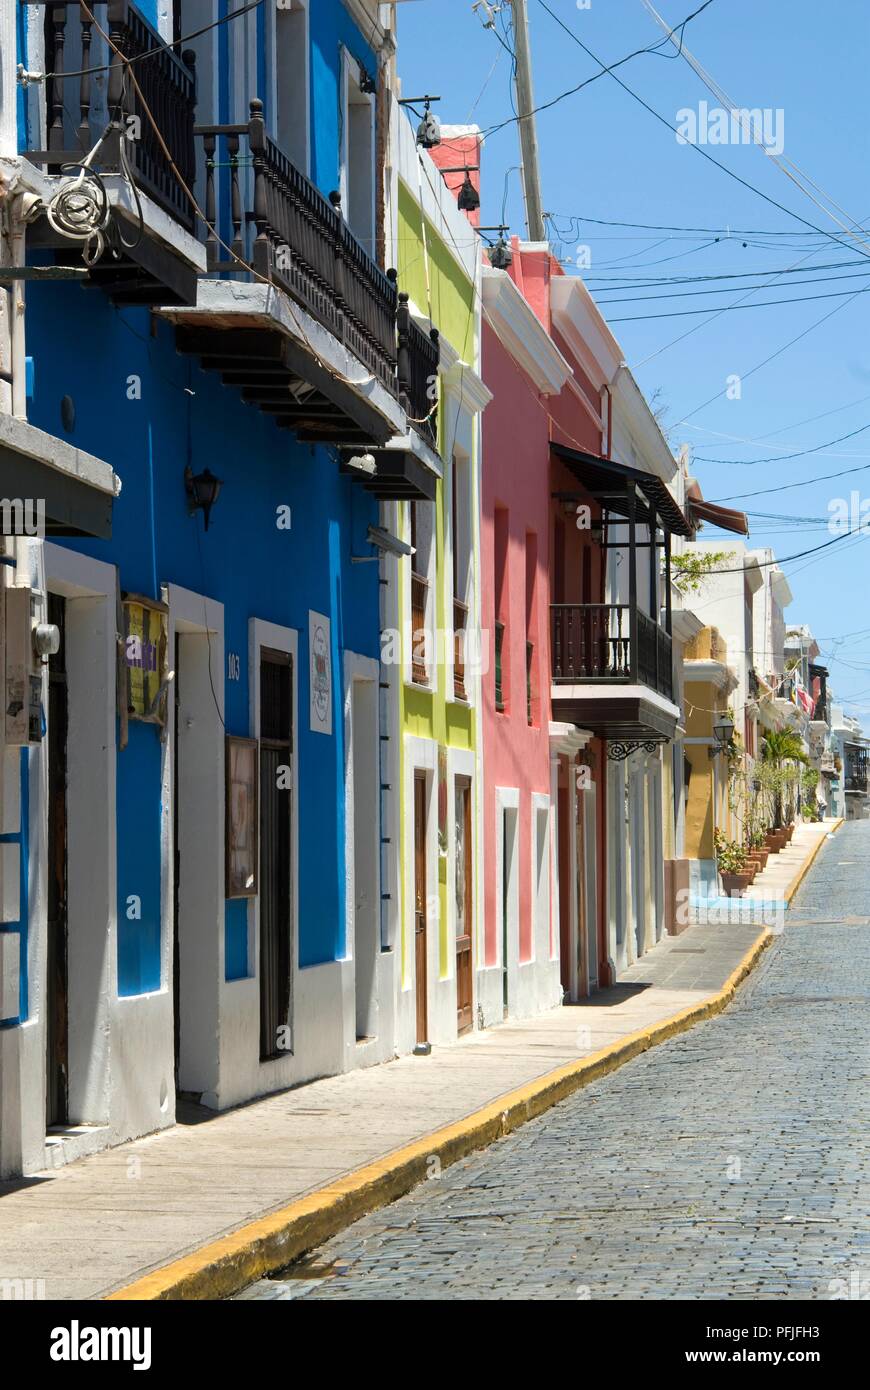 Puerto Rico, San Juan, Calle de San Sebastian, colourful houses lining street Stock Photo